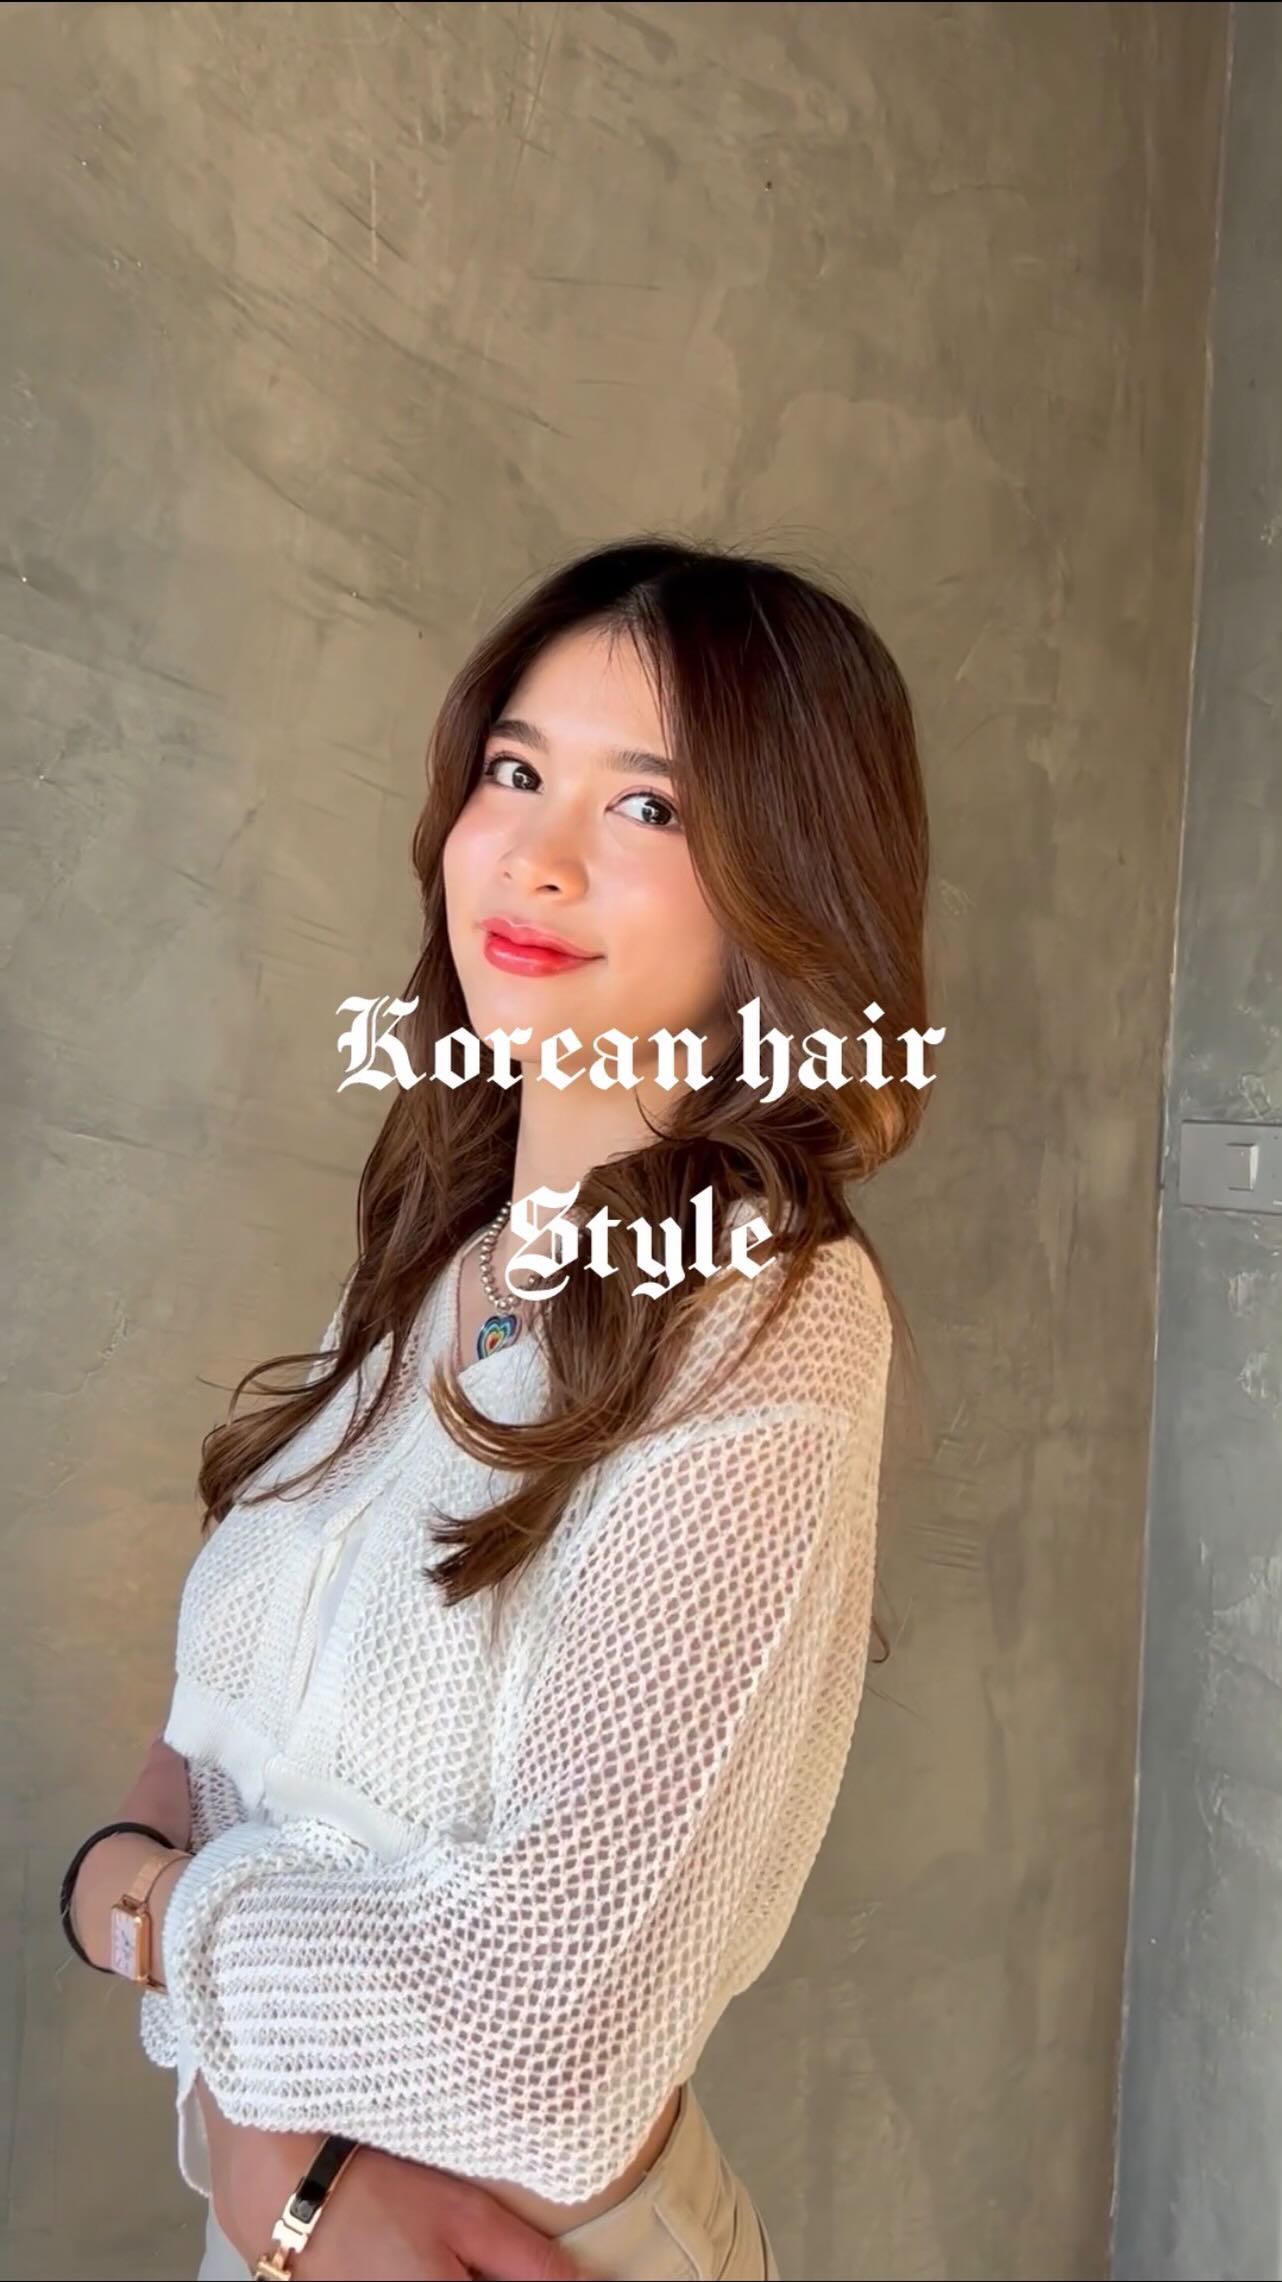 WAVY-LAYERED CUT - Kpop Korean Hair and Style